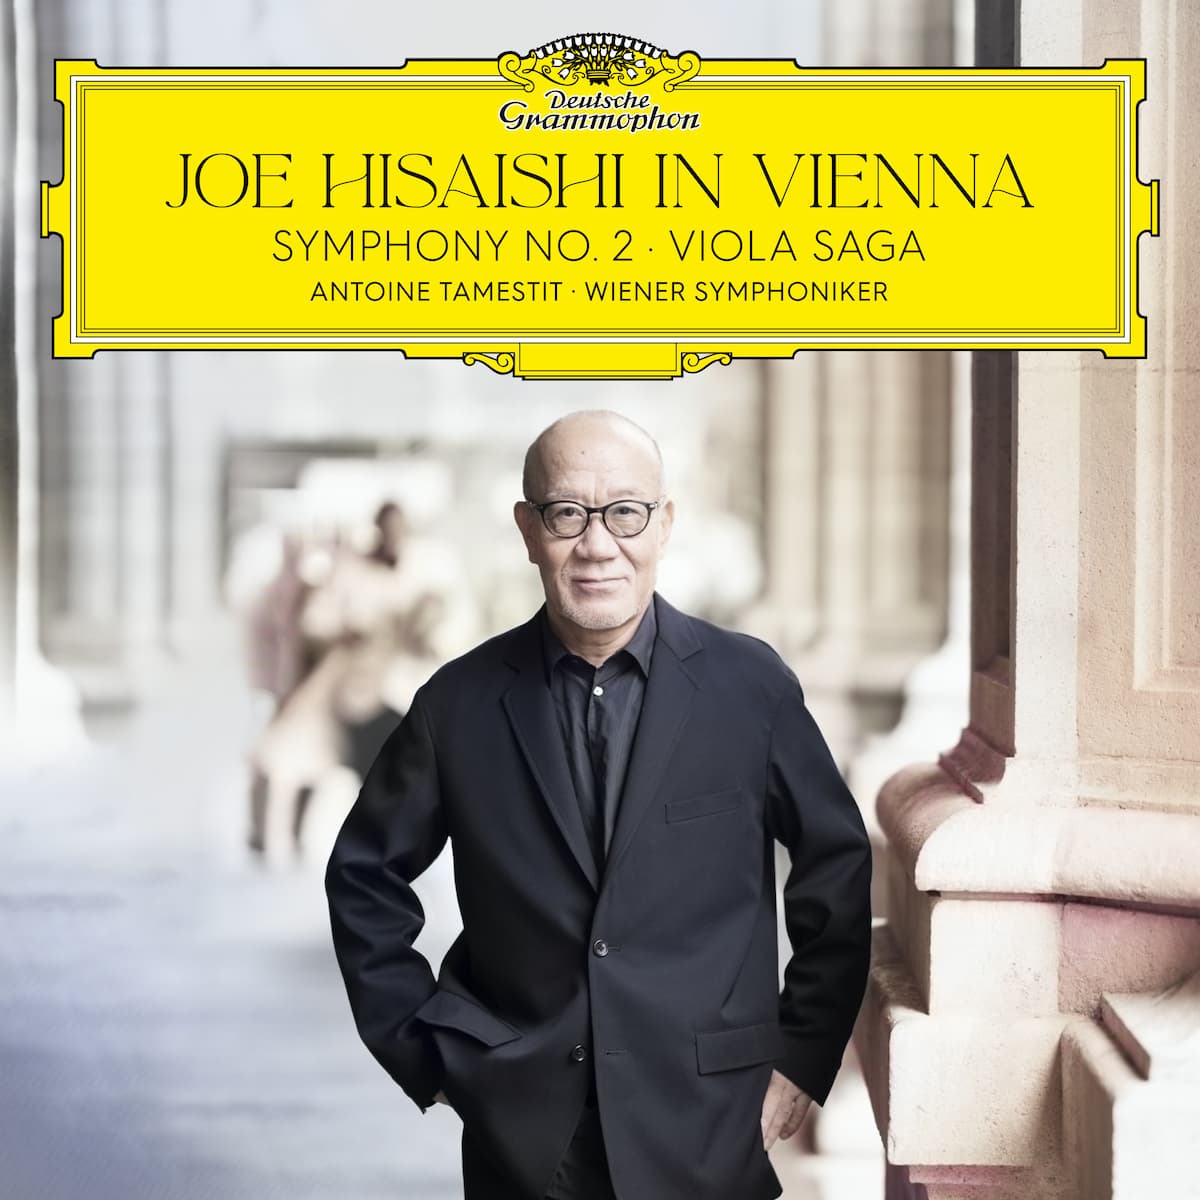 JOE HISAISHI IN VIENNA album cover